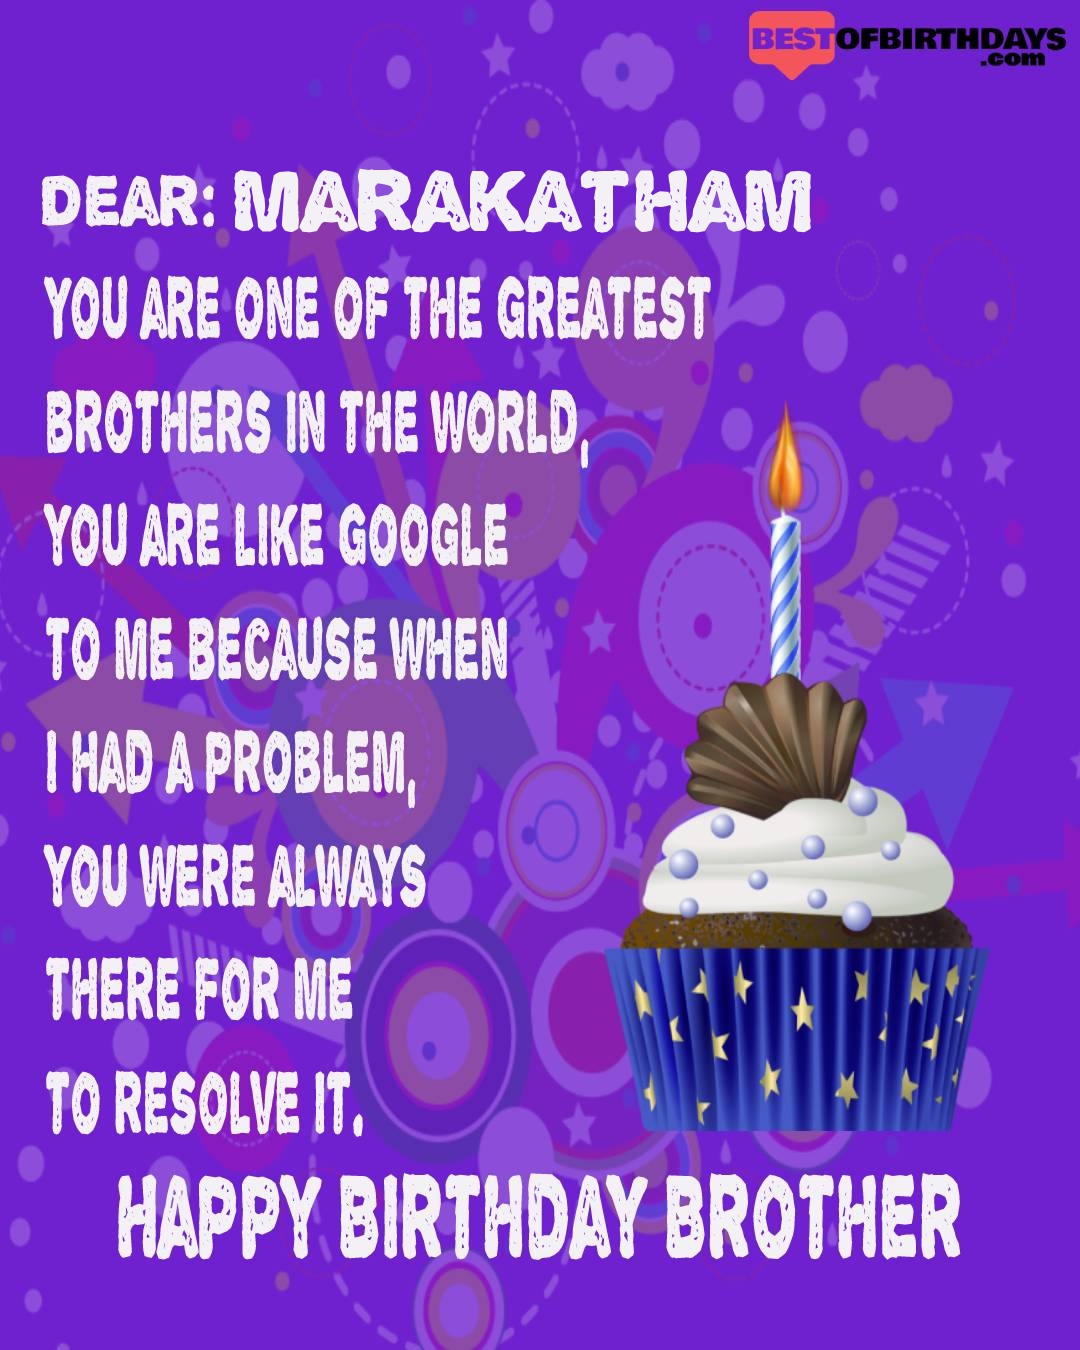 Happy birthday marakatham bhai brother bro